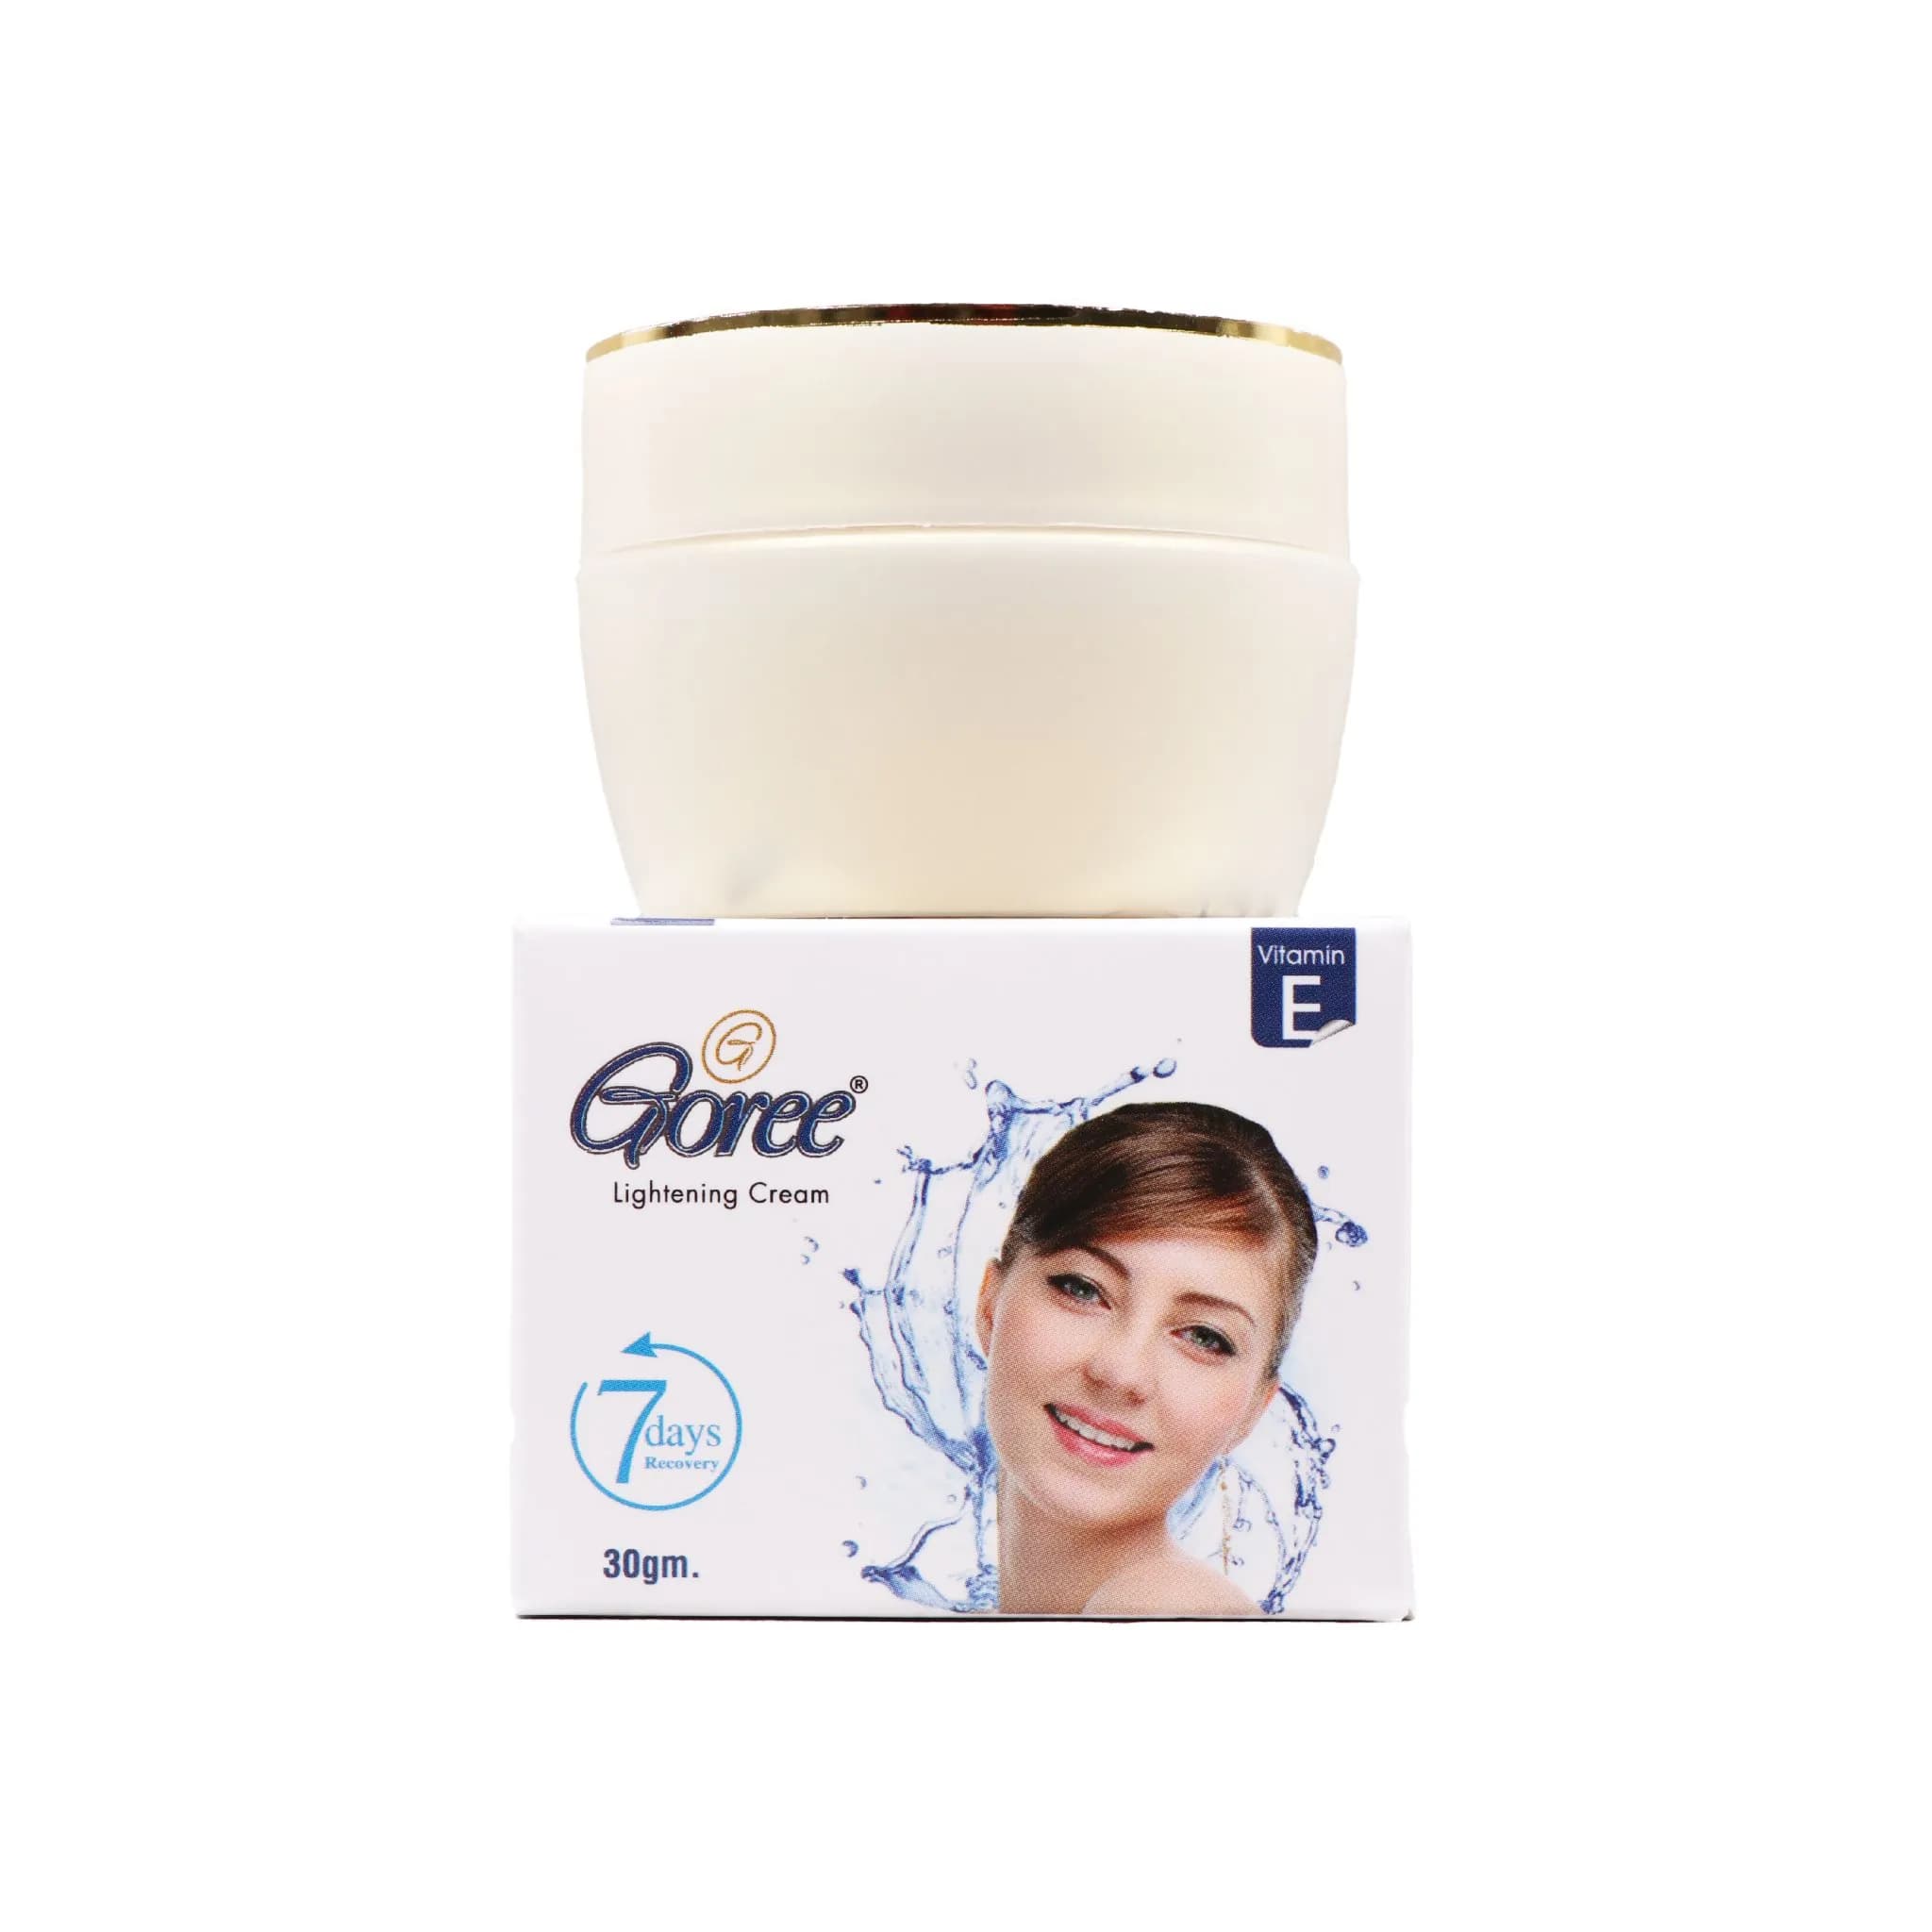 Goree Lightening Cream 7 Days 30gm